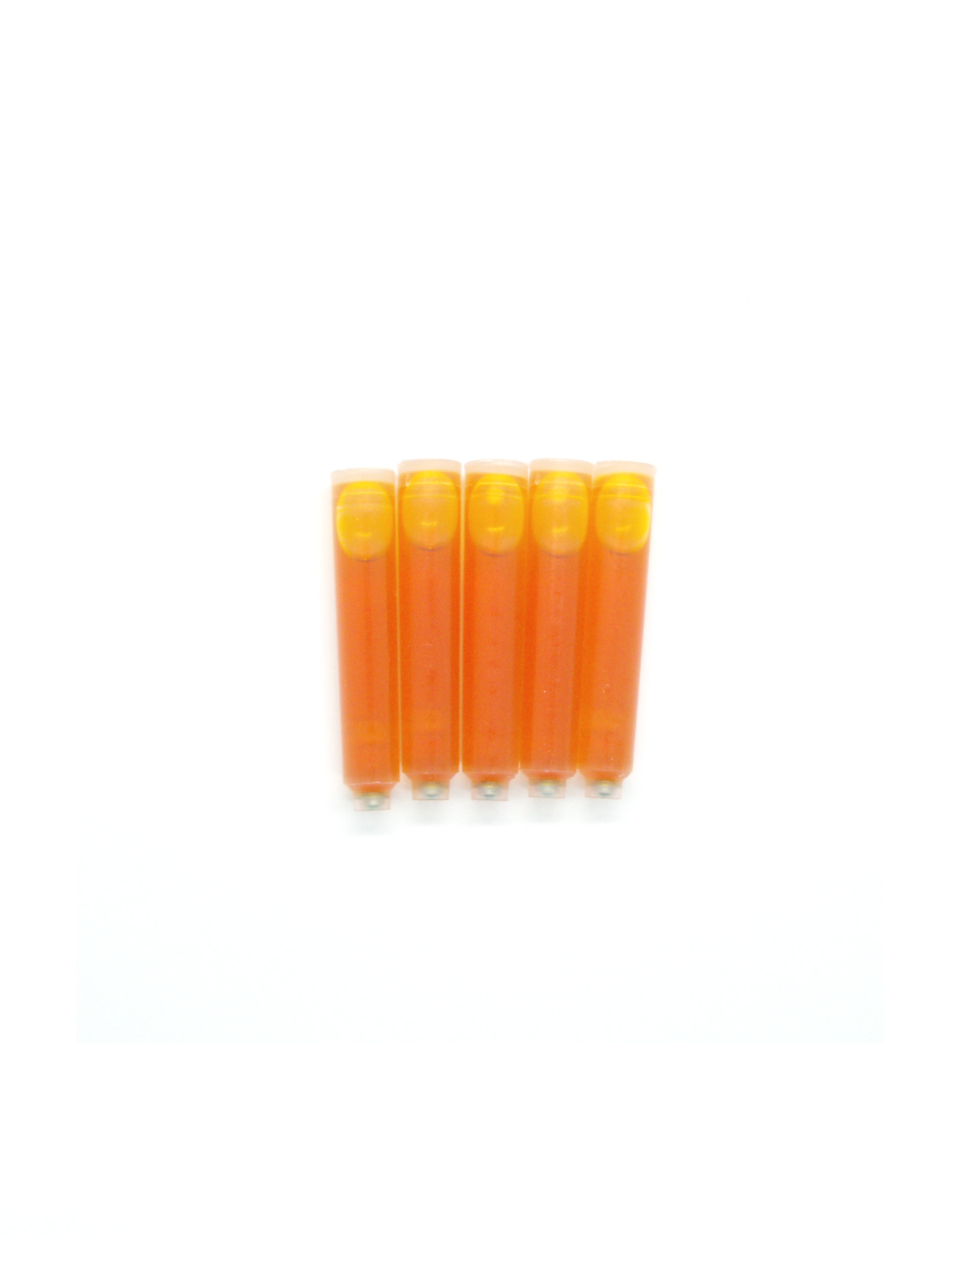 PenConverter Ink Cartridges For Staedtler Fountain Pens (Yellow)